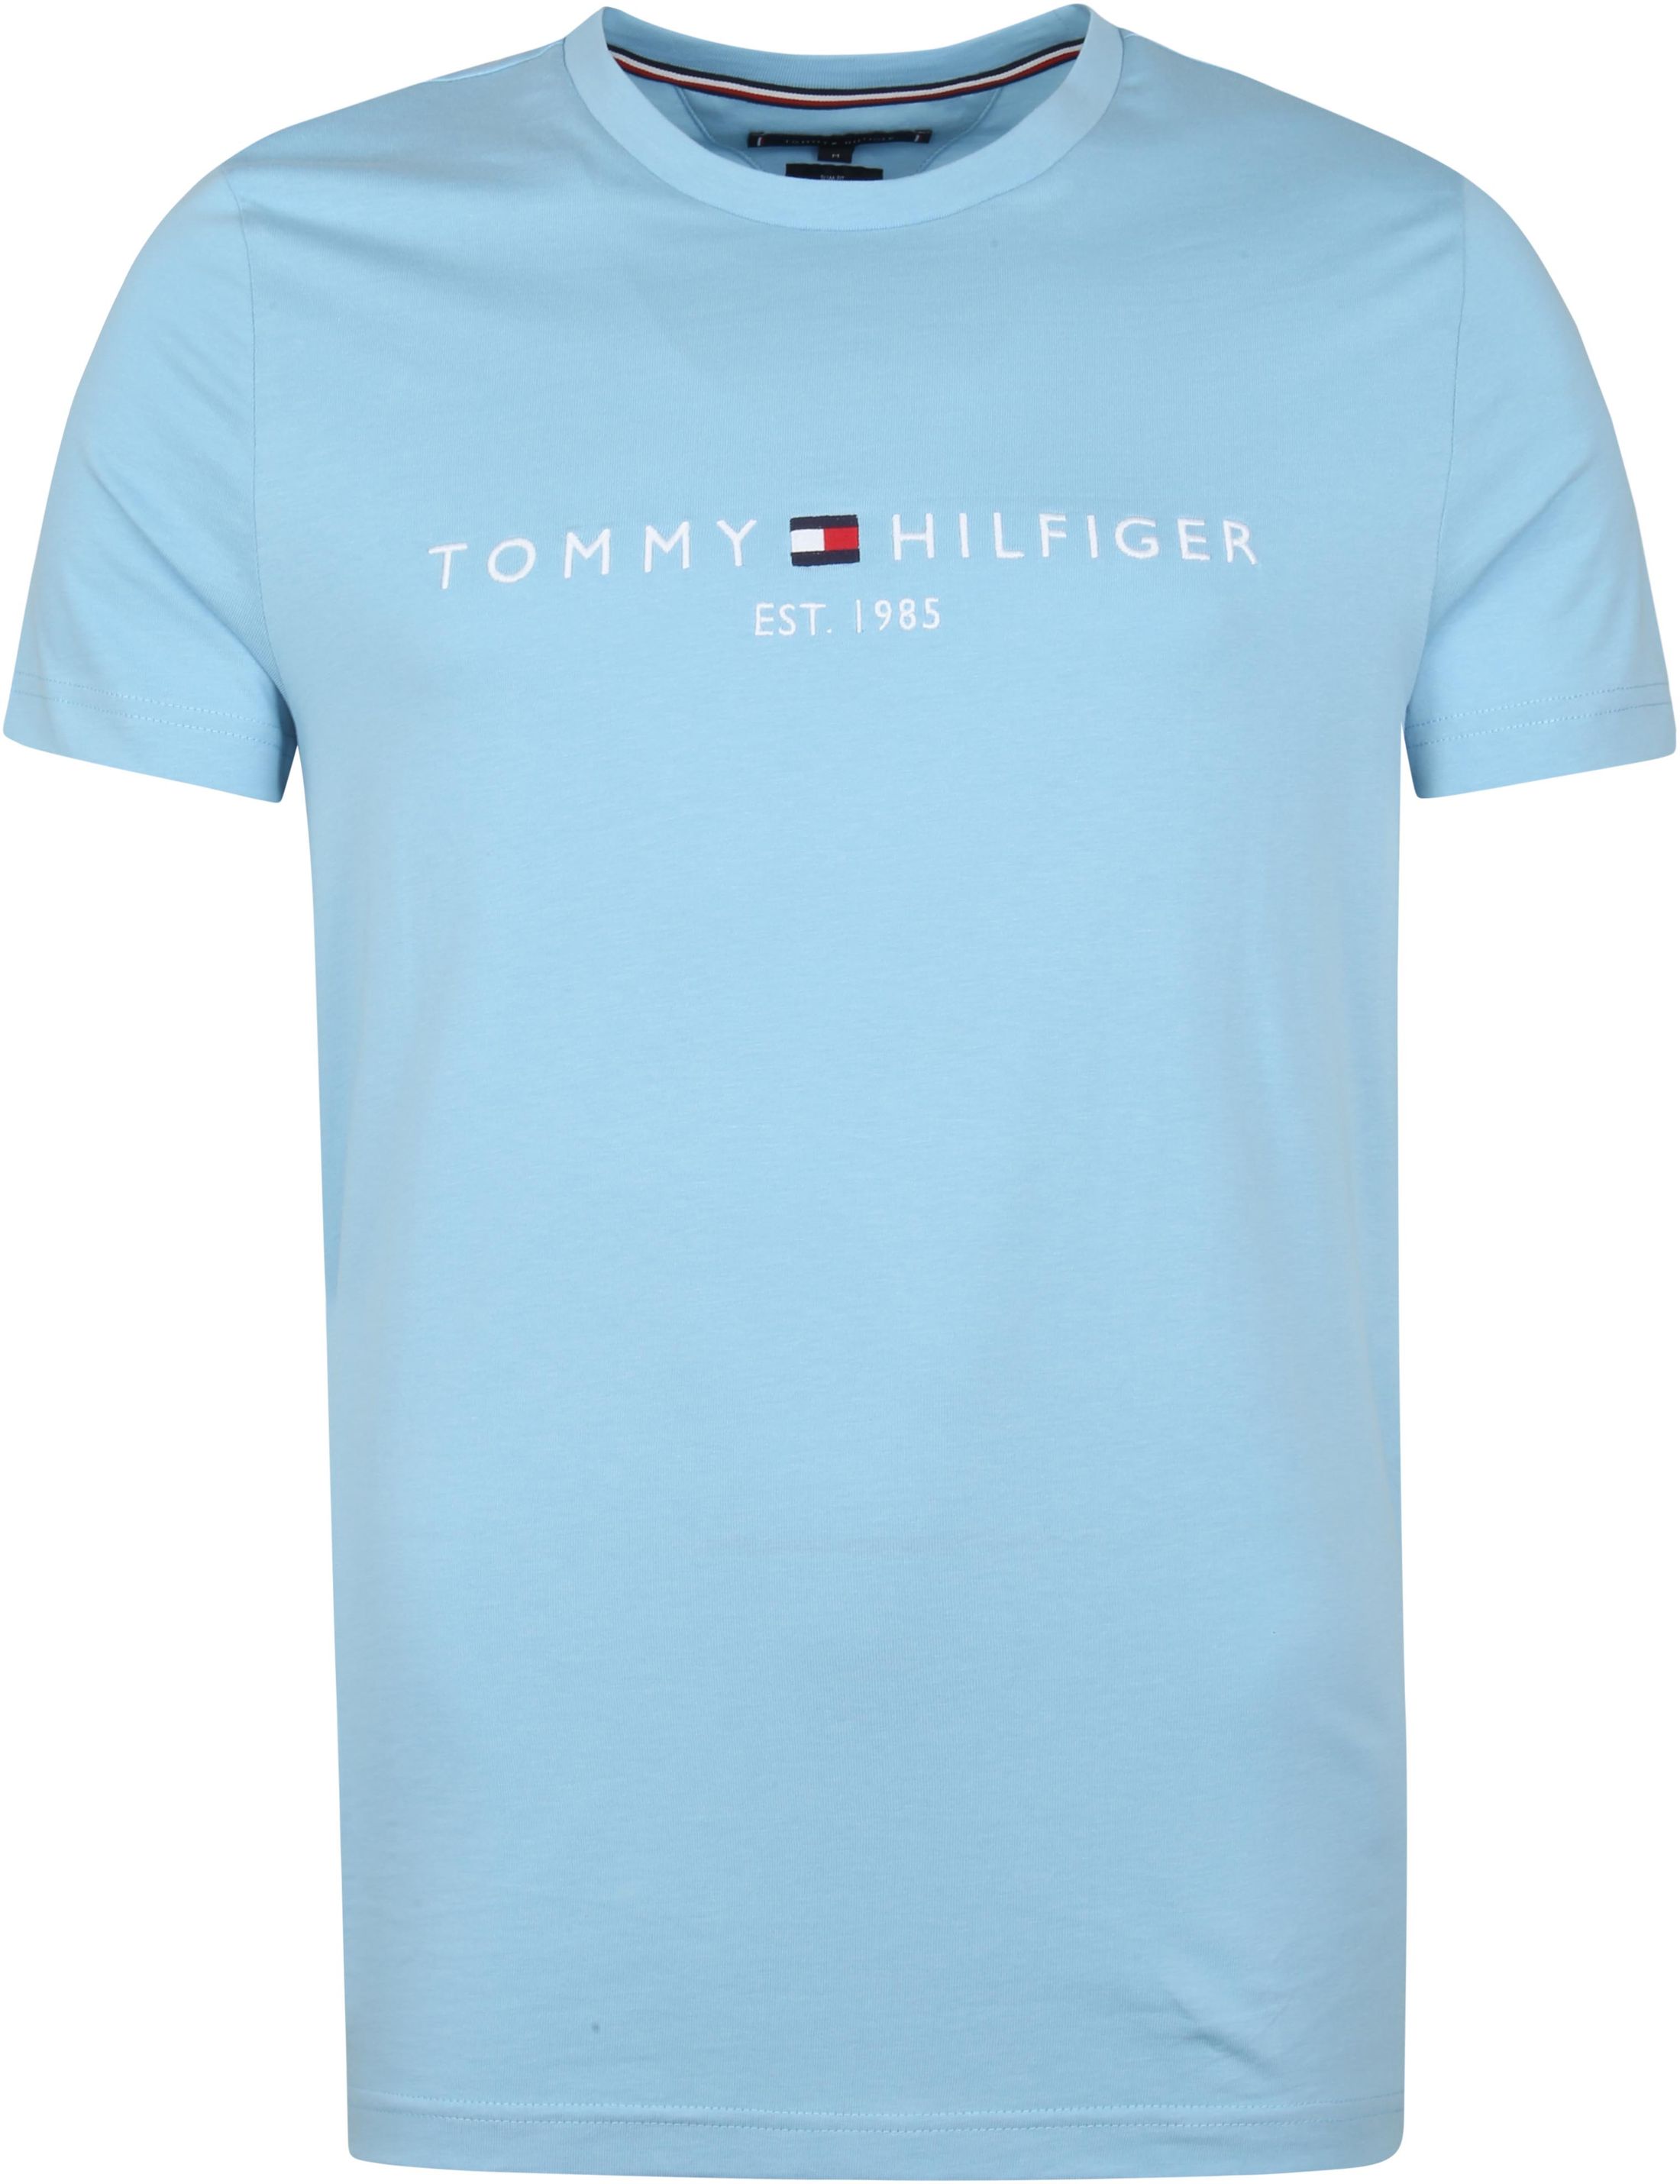 Tommy Hilfiger T Shirt Logo Light Light blue Blue size L